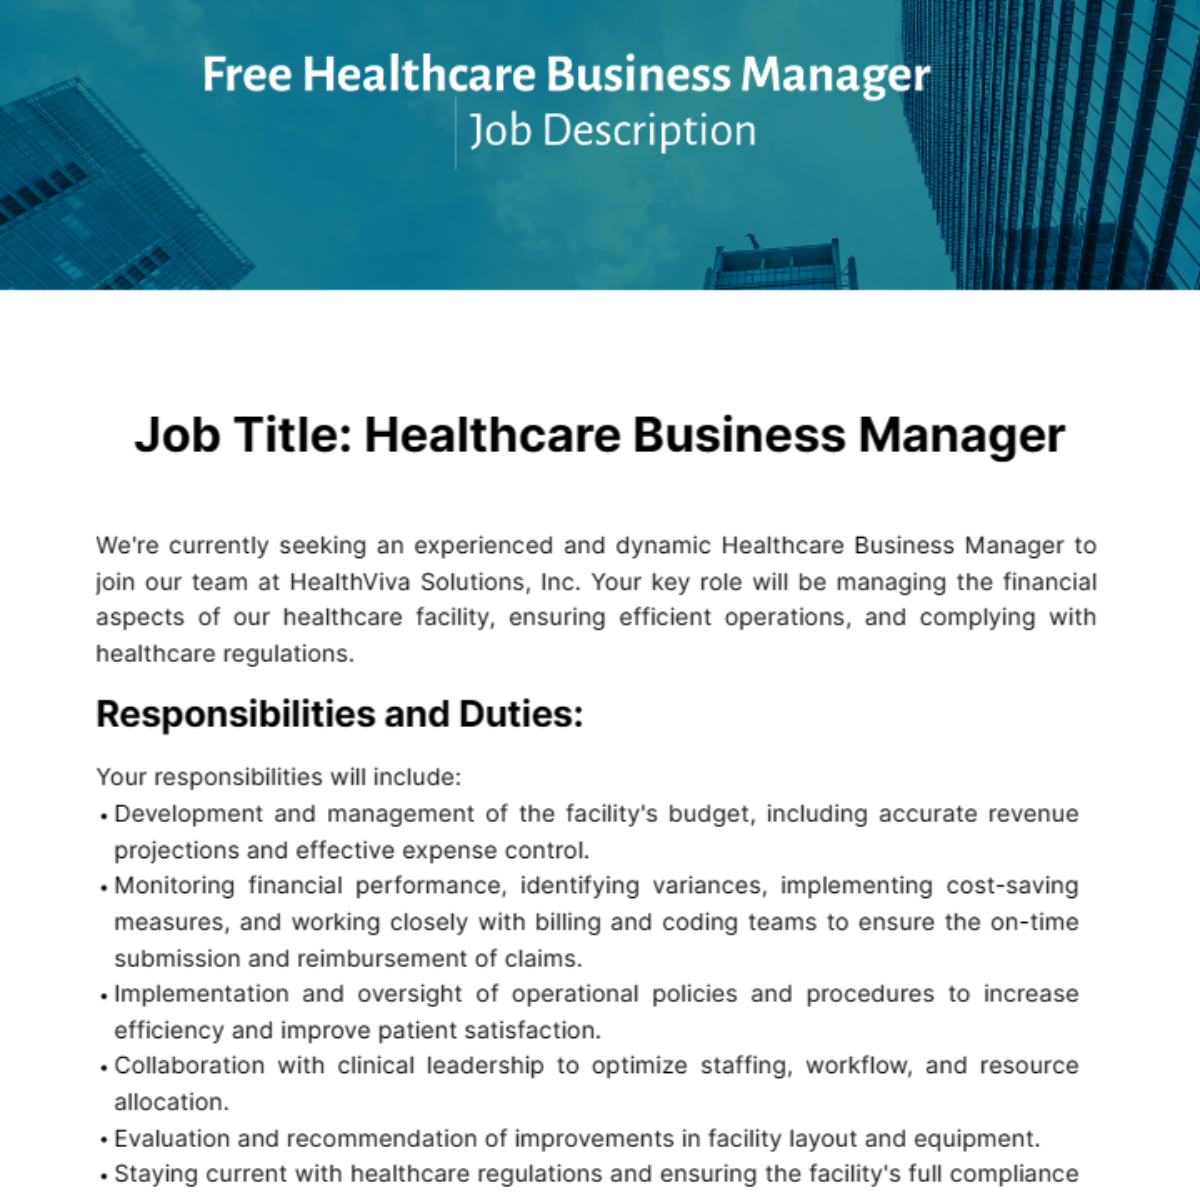 Free Healthcare Business Manager Job Description Template